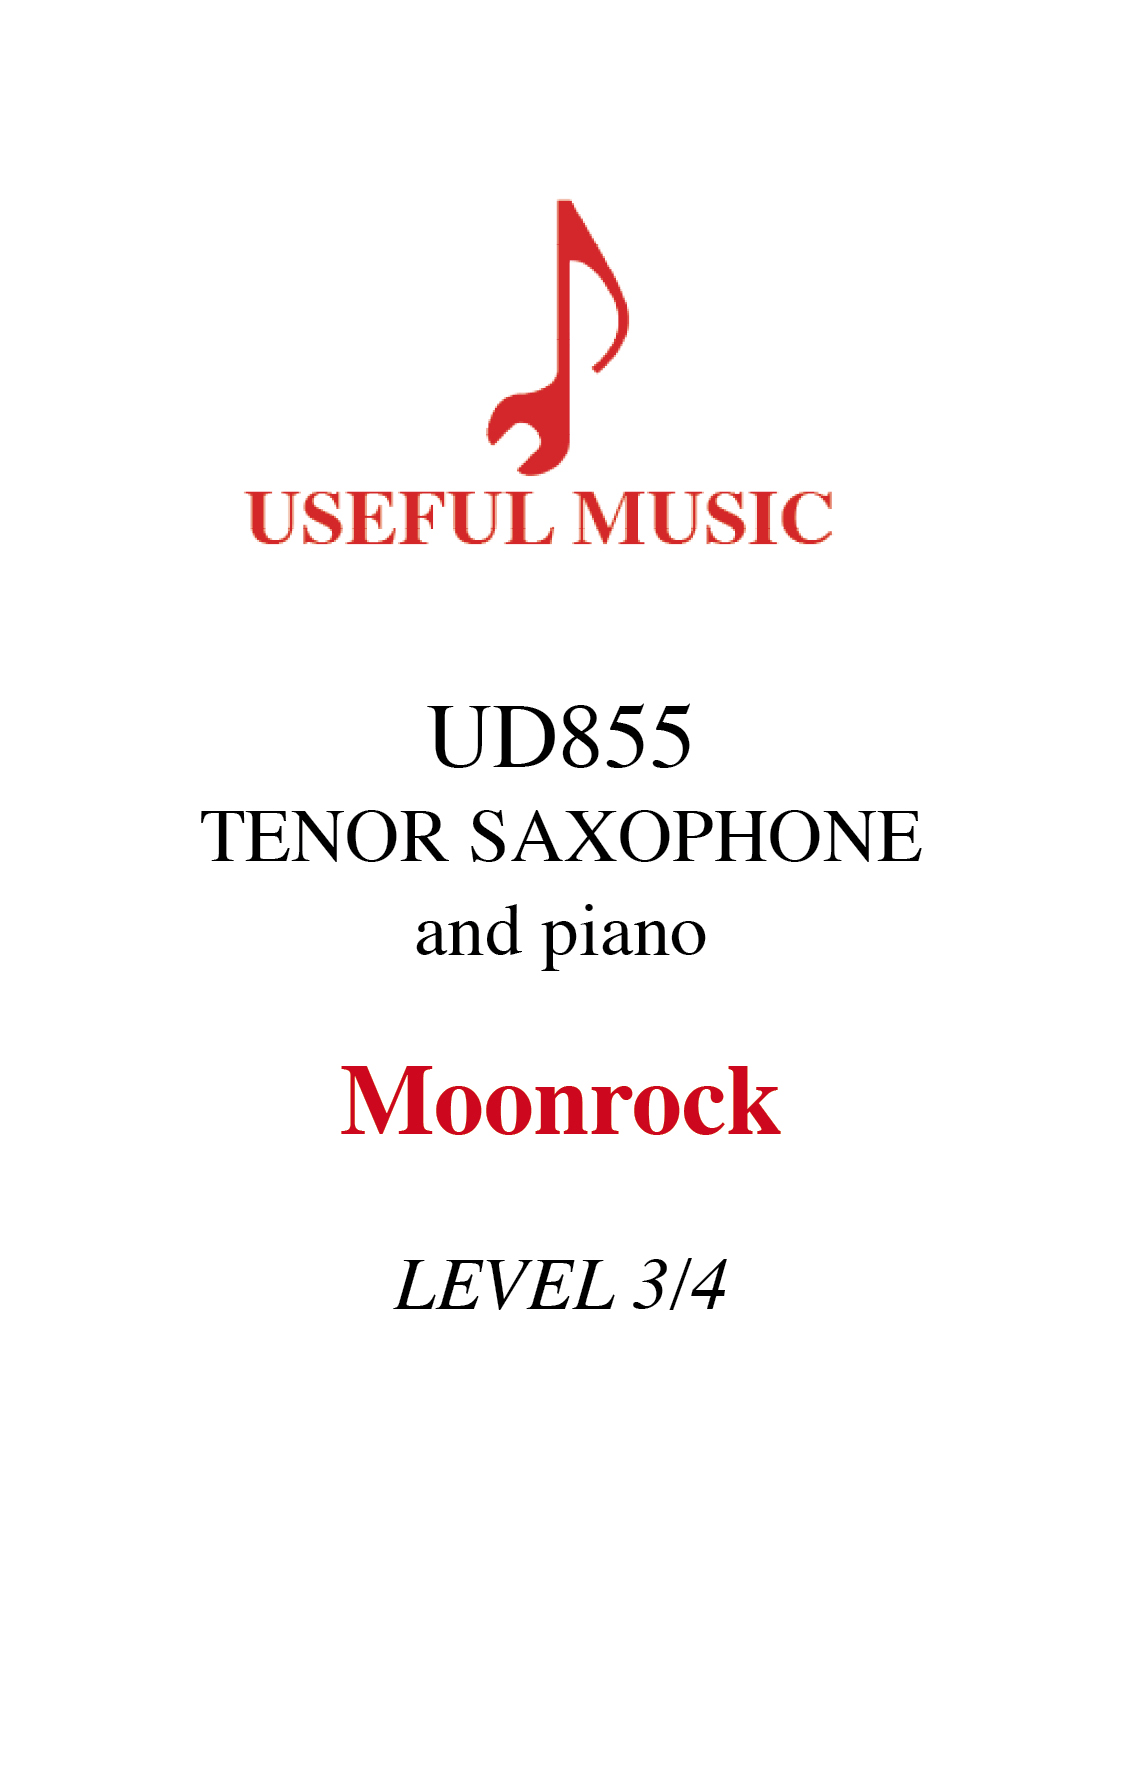 Moonrock - tenor saxophone with piano accompaniment